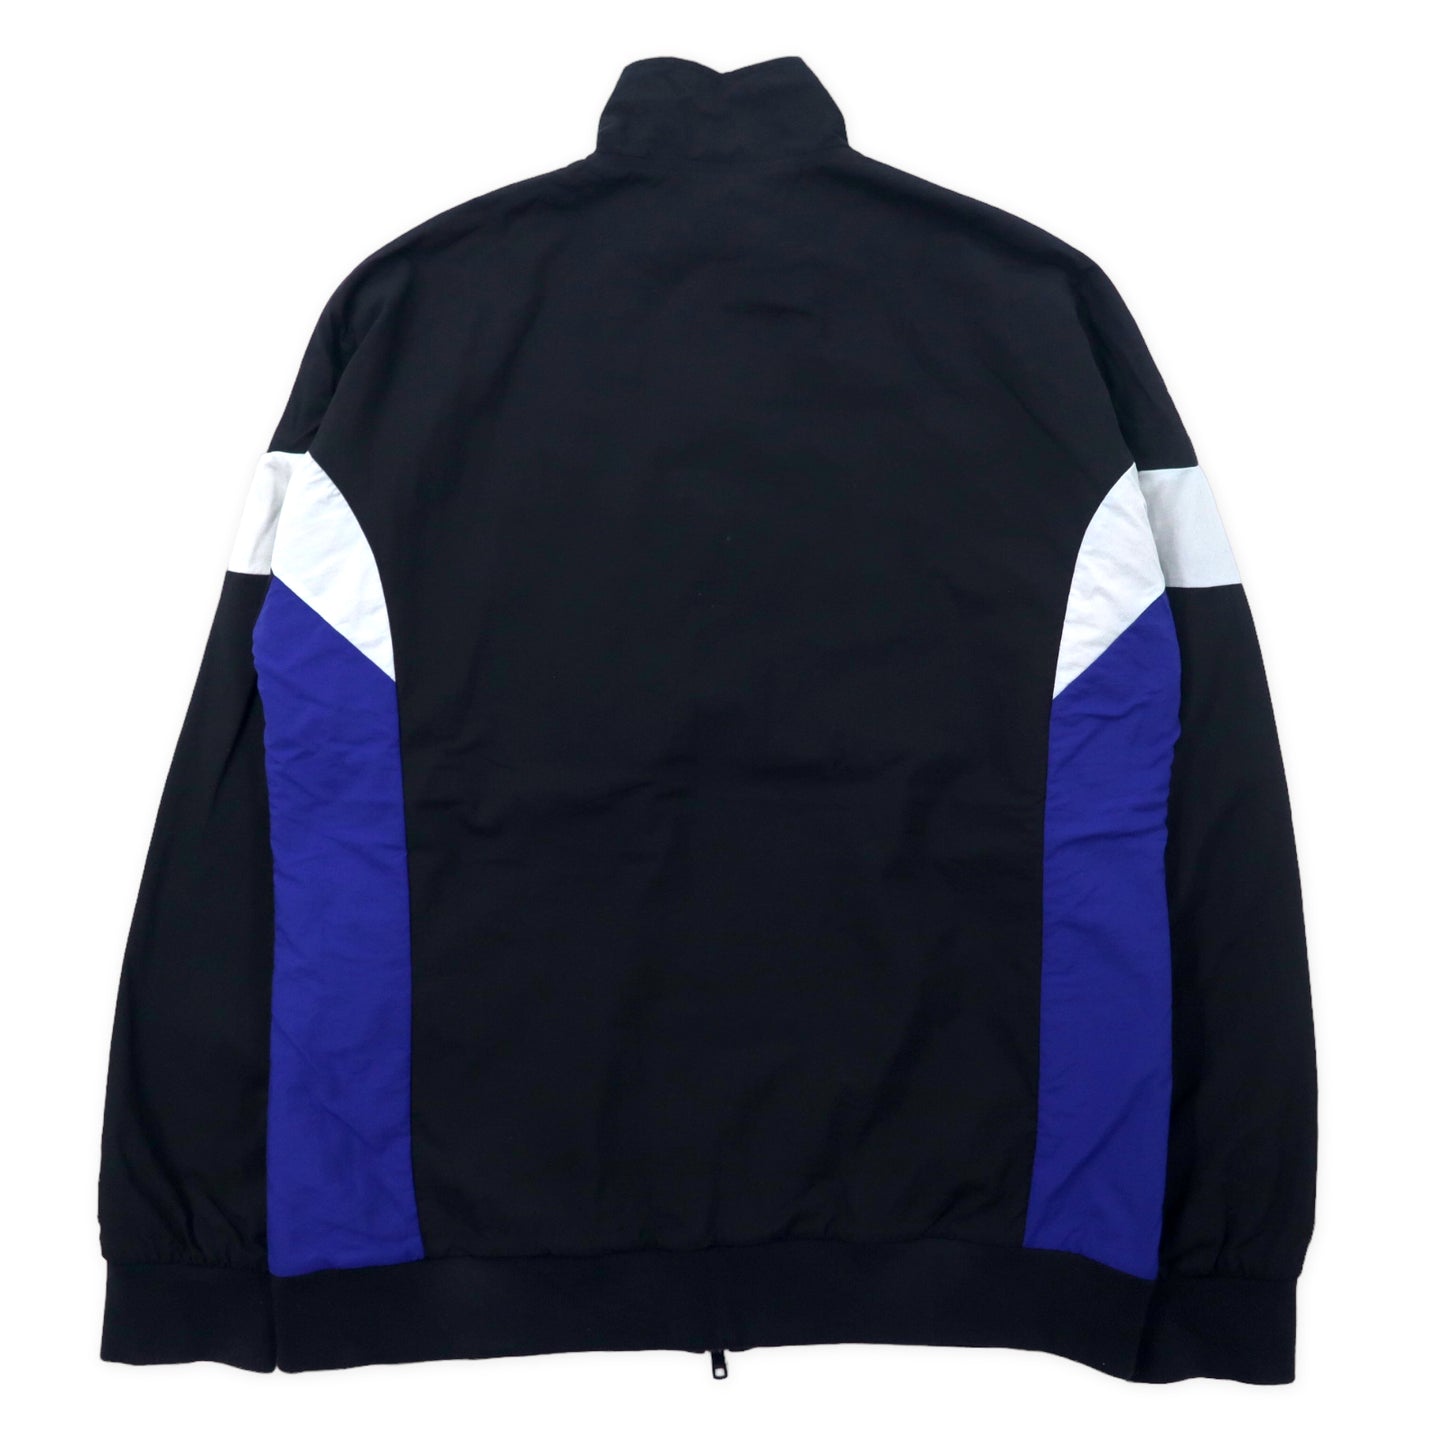 Adidas Originals Track Jacket Jersey XL Black Nylon 3 STRIPED